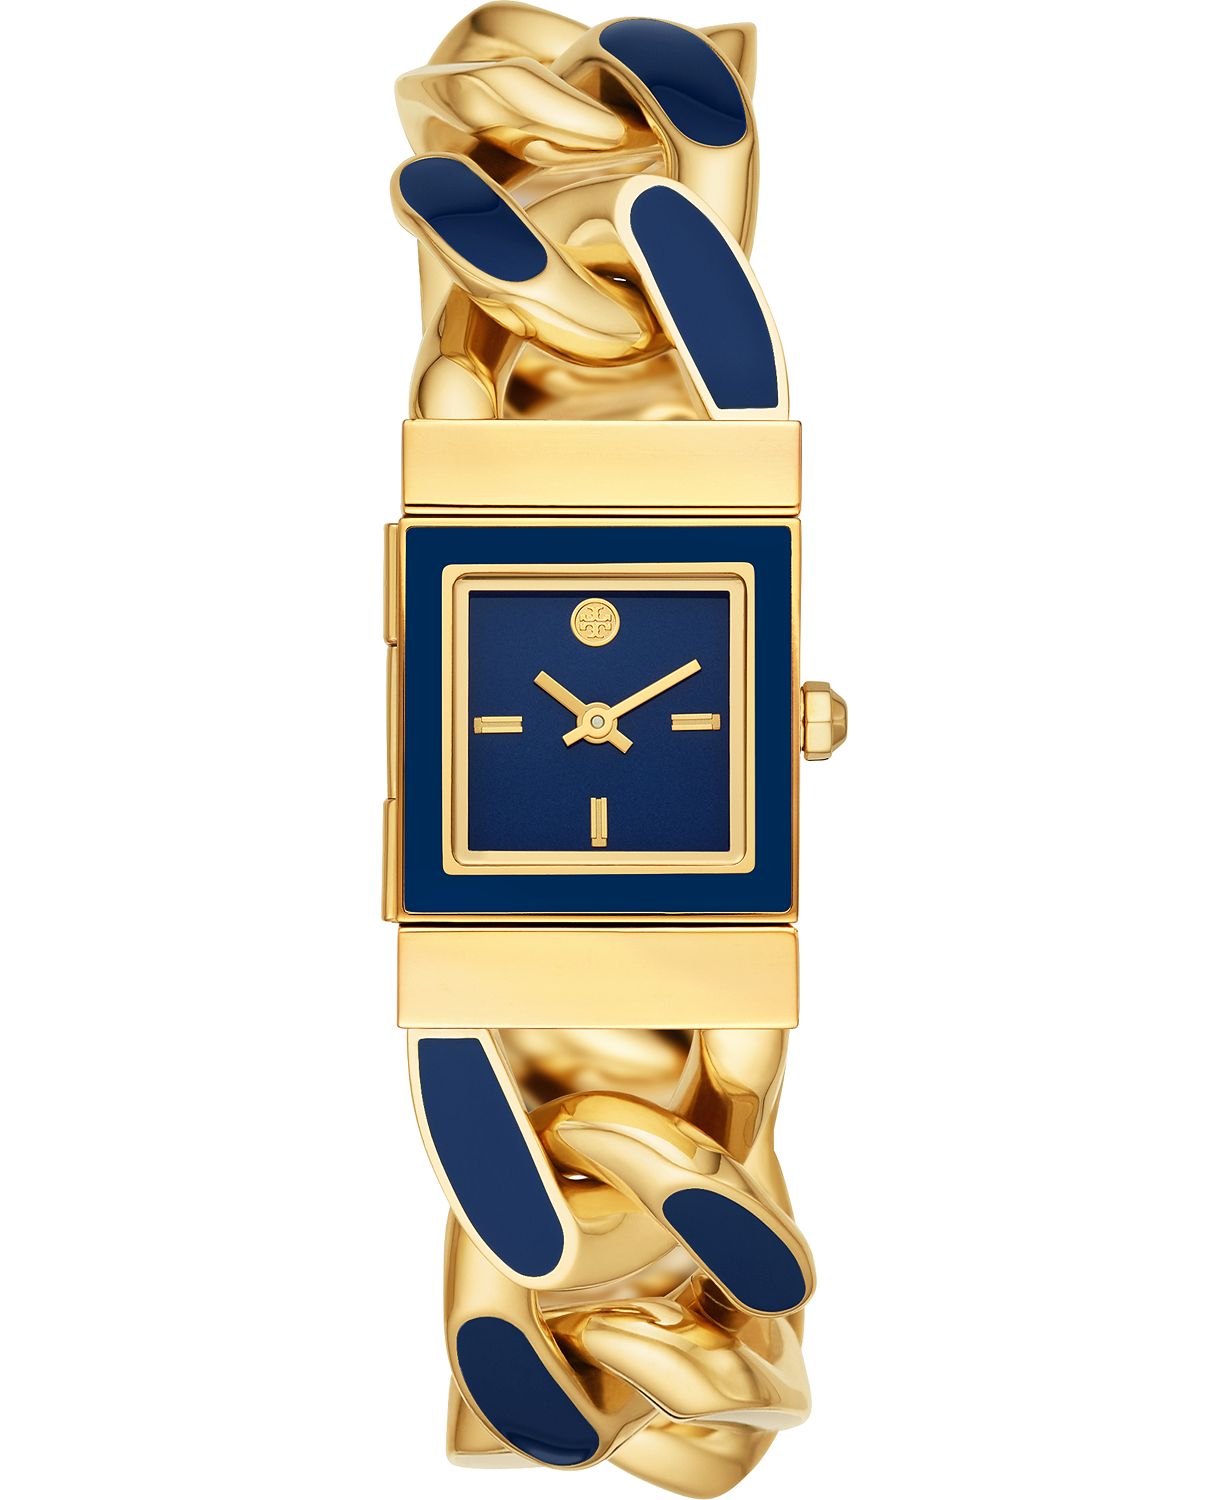 Tory Burch Women’s Tilda Blue & Gold-Tone Stainless Steel Bracelet Watch $197.50 (50% off)